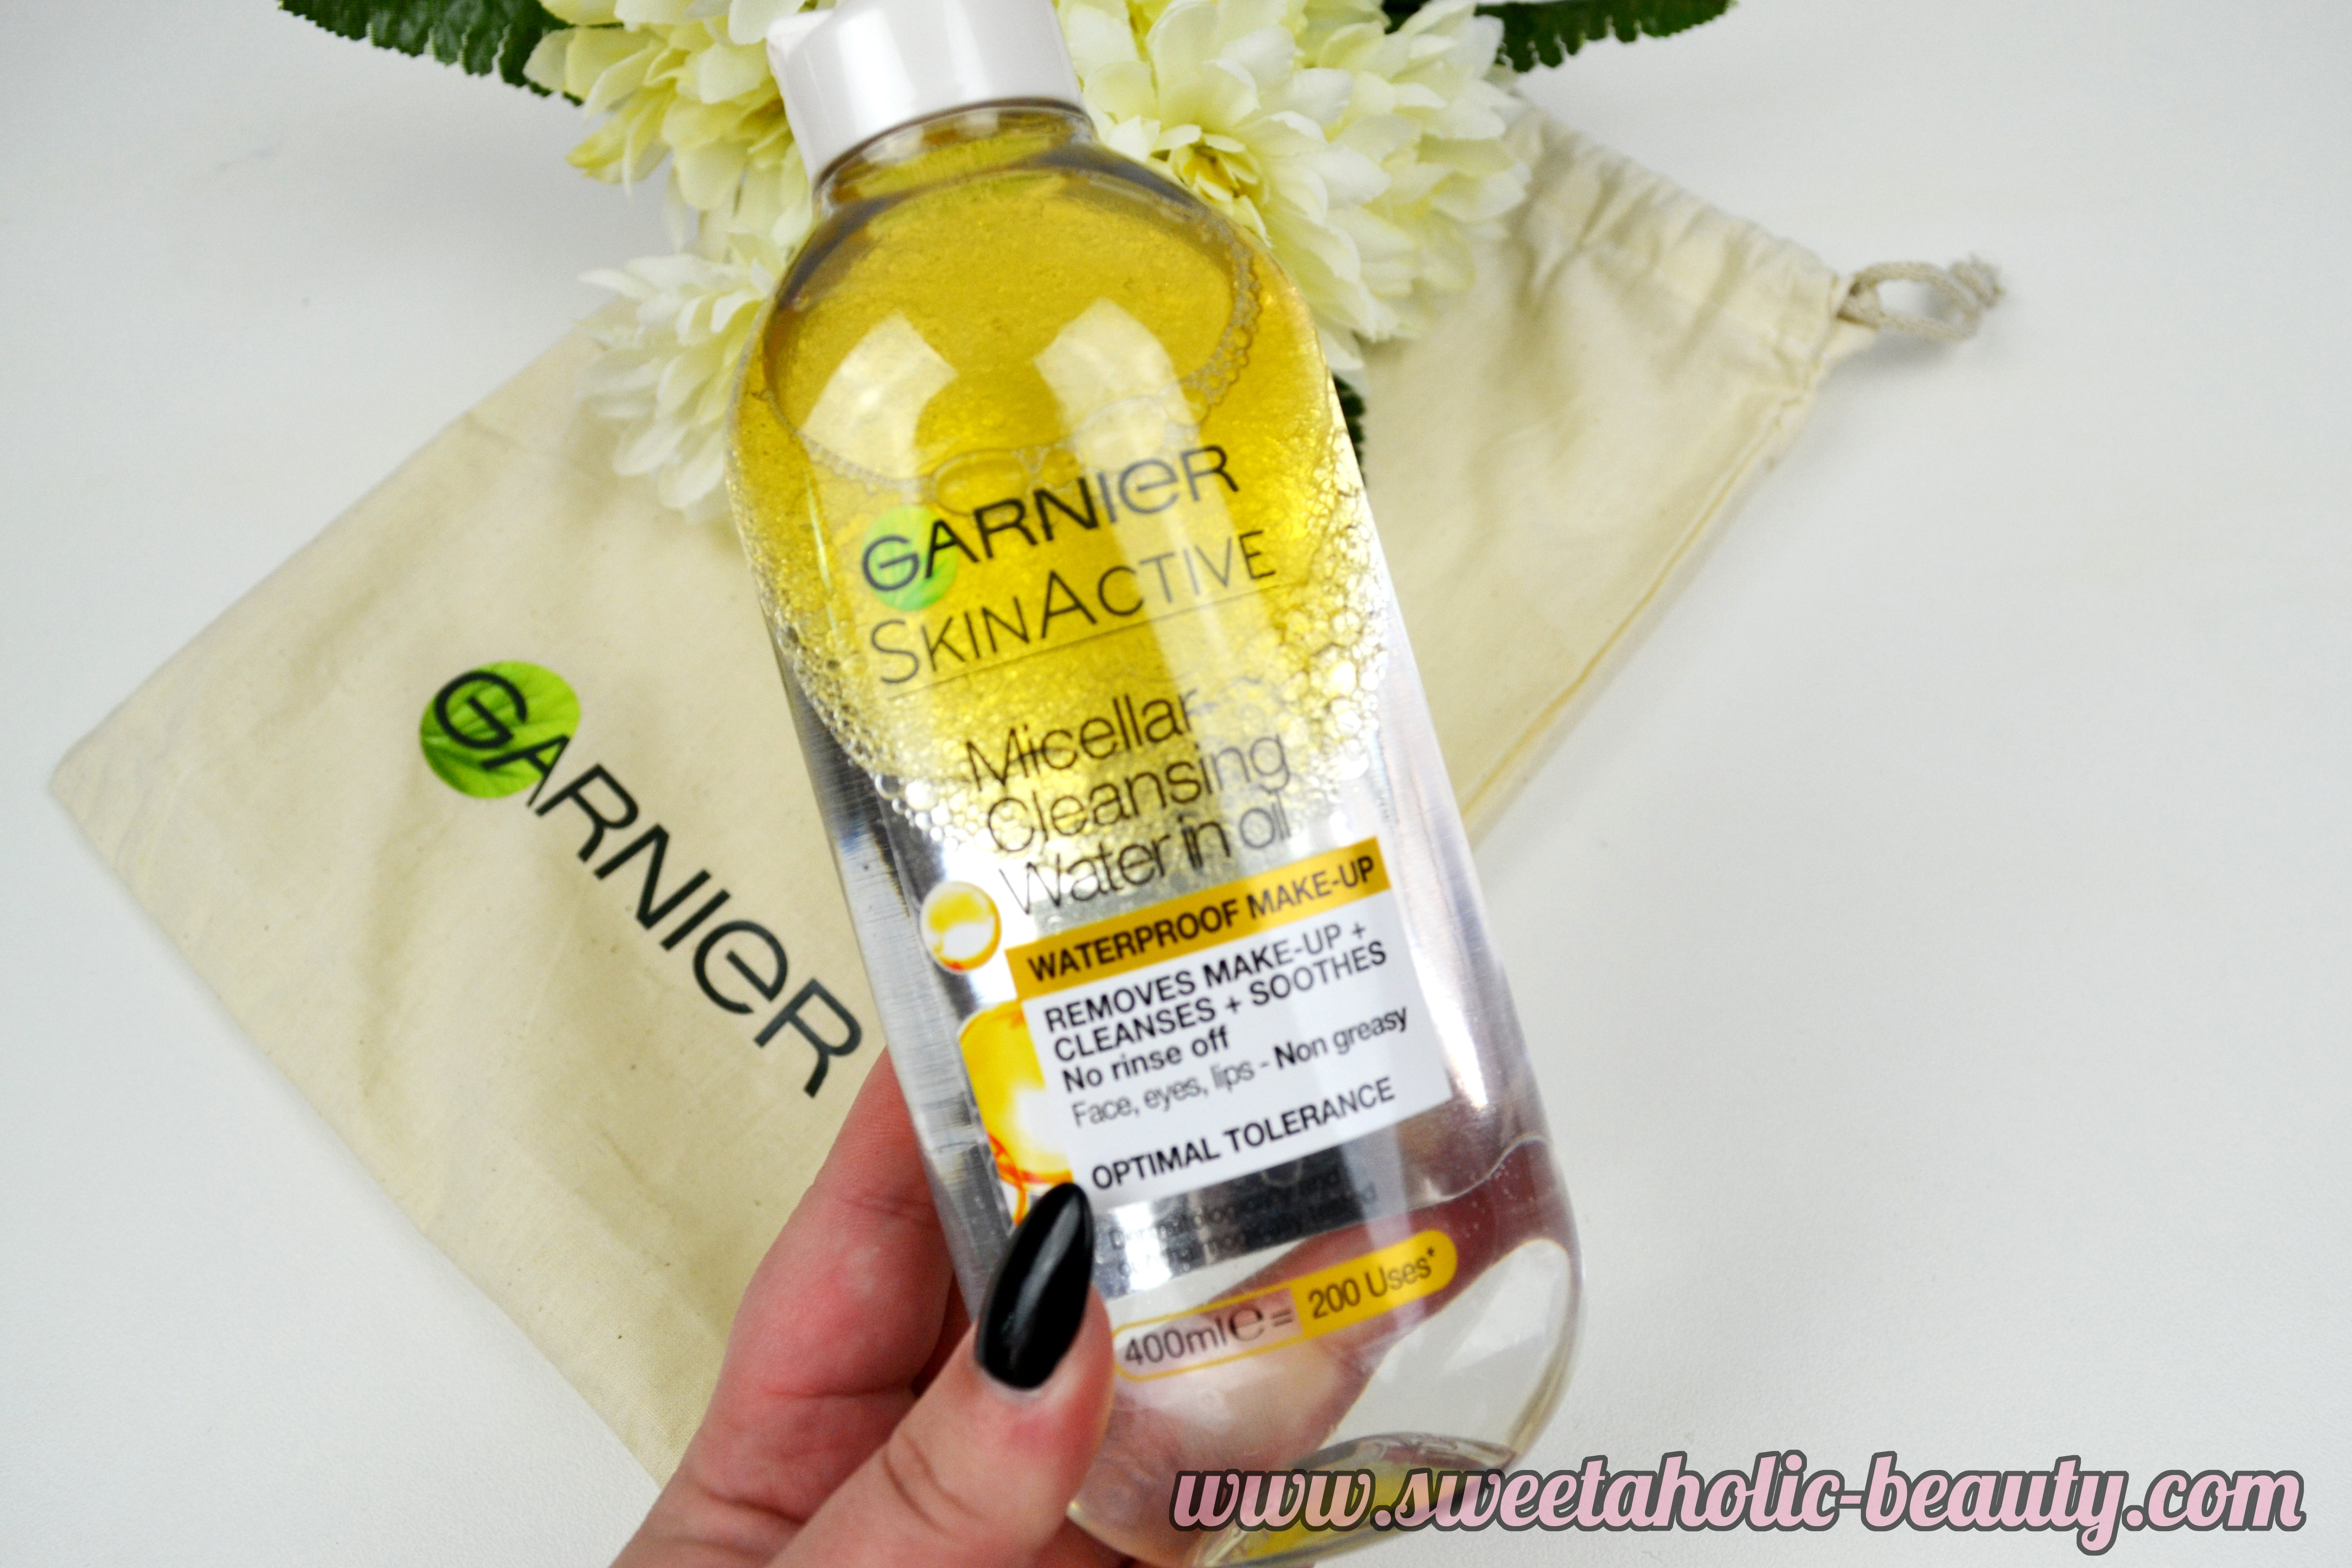 New Garnier Skin Active Products - Sweetaholic Beauty